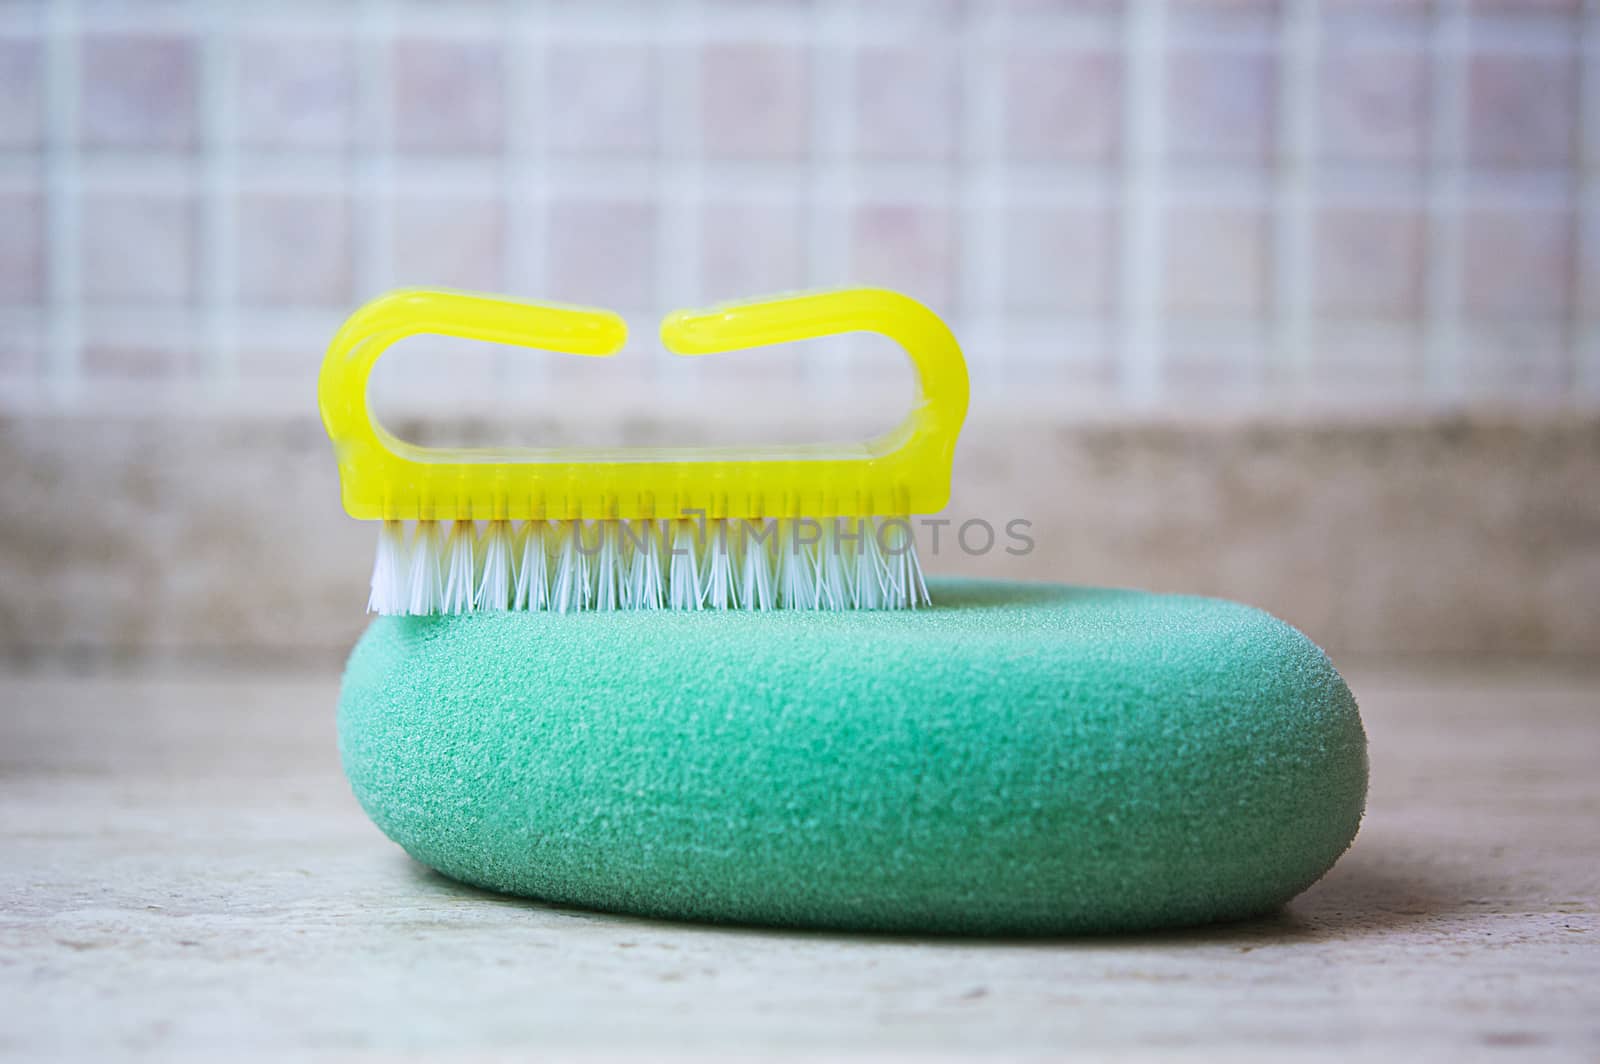 Nail brush and sponge bath